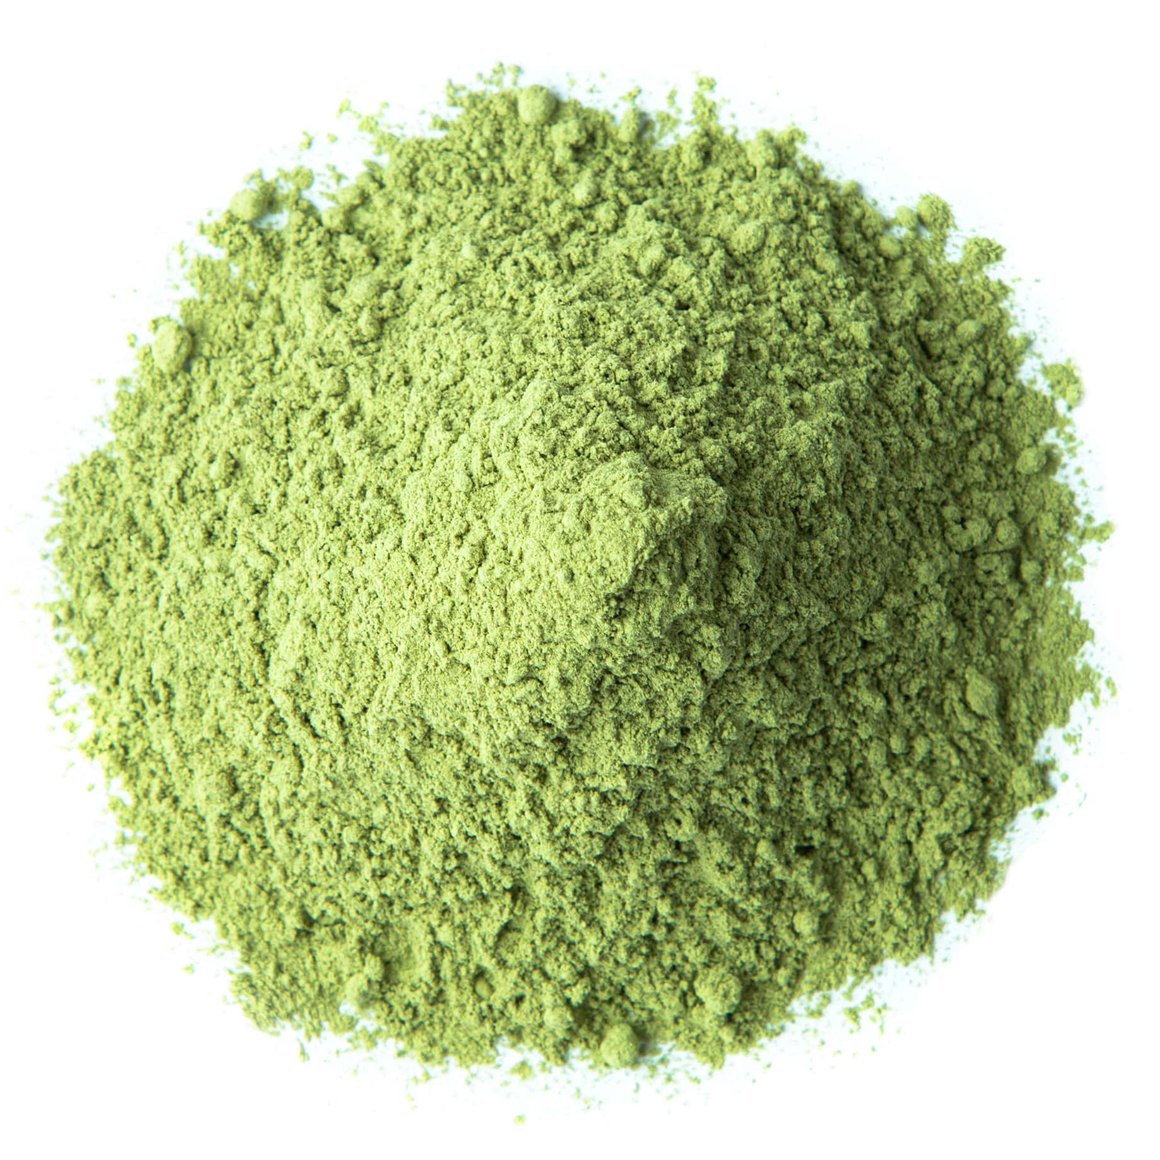 1-organic-supergrass-powder-mix-main-min